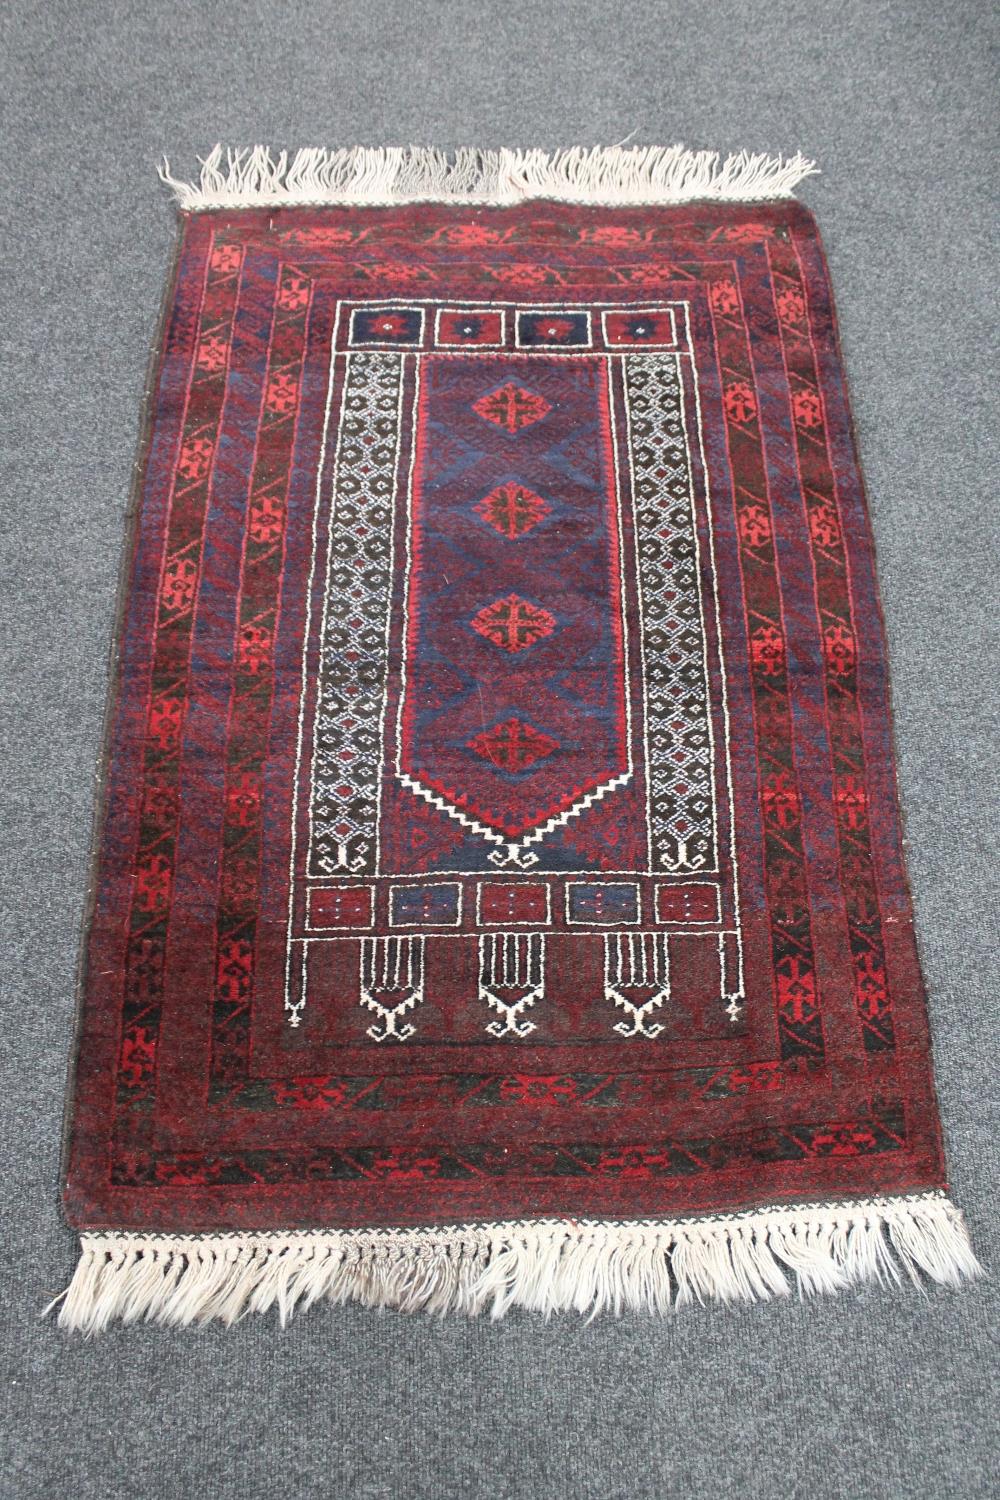 An Afghan prayer rug 143 cm x 85 cm